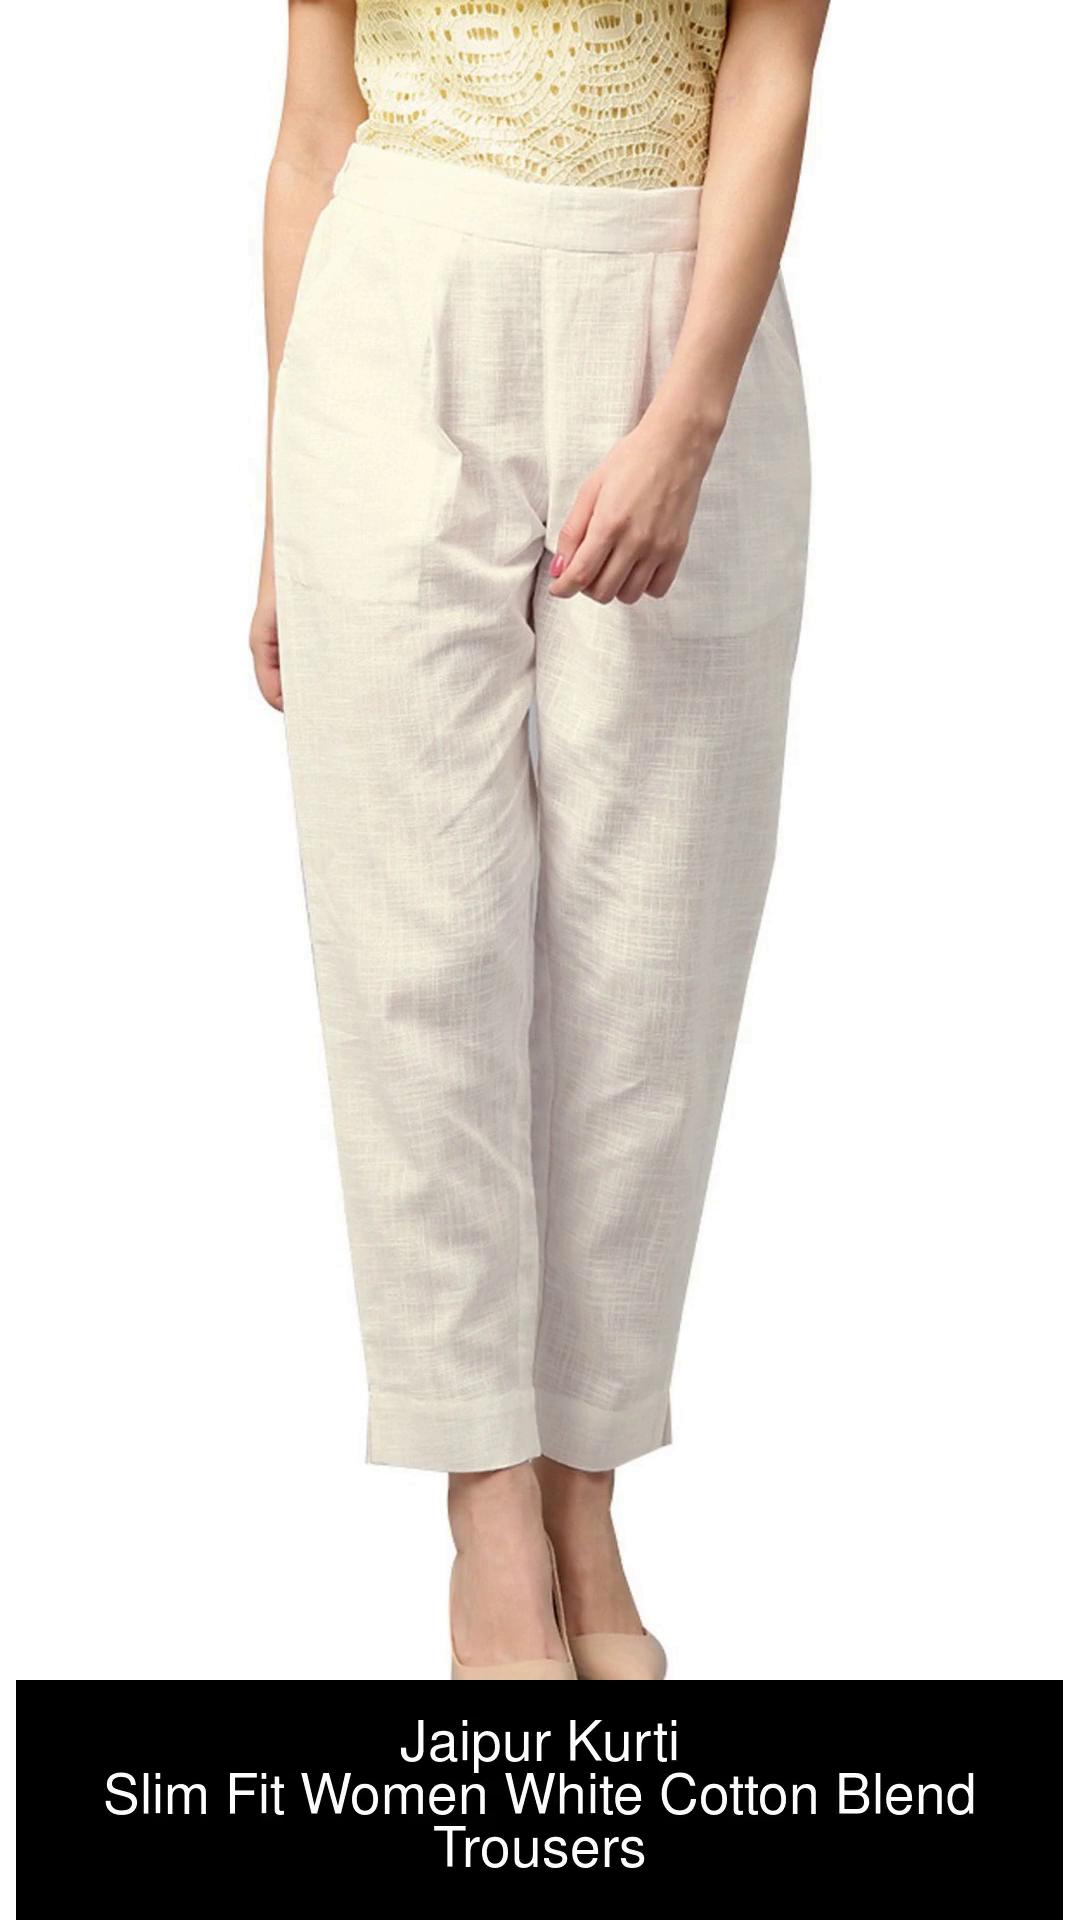 Jaipur Kurti Slim Fit Women White Trousers